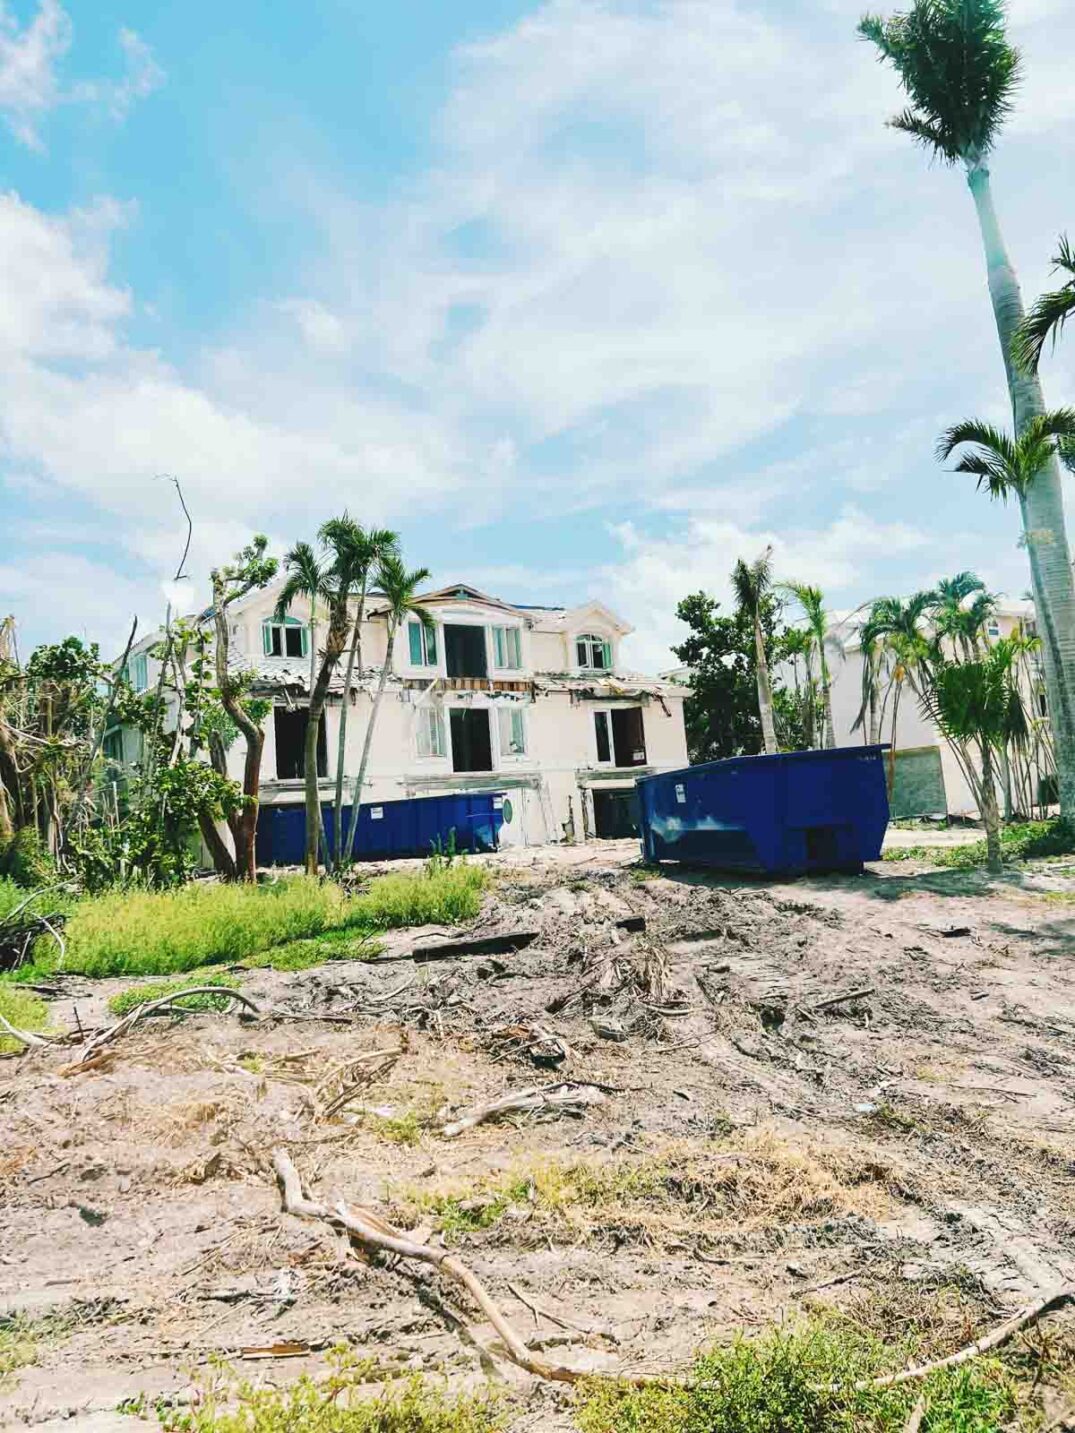 destroyed home on sanibel captiva after hurricane ian.